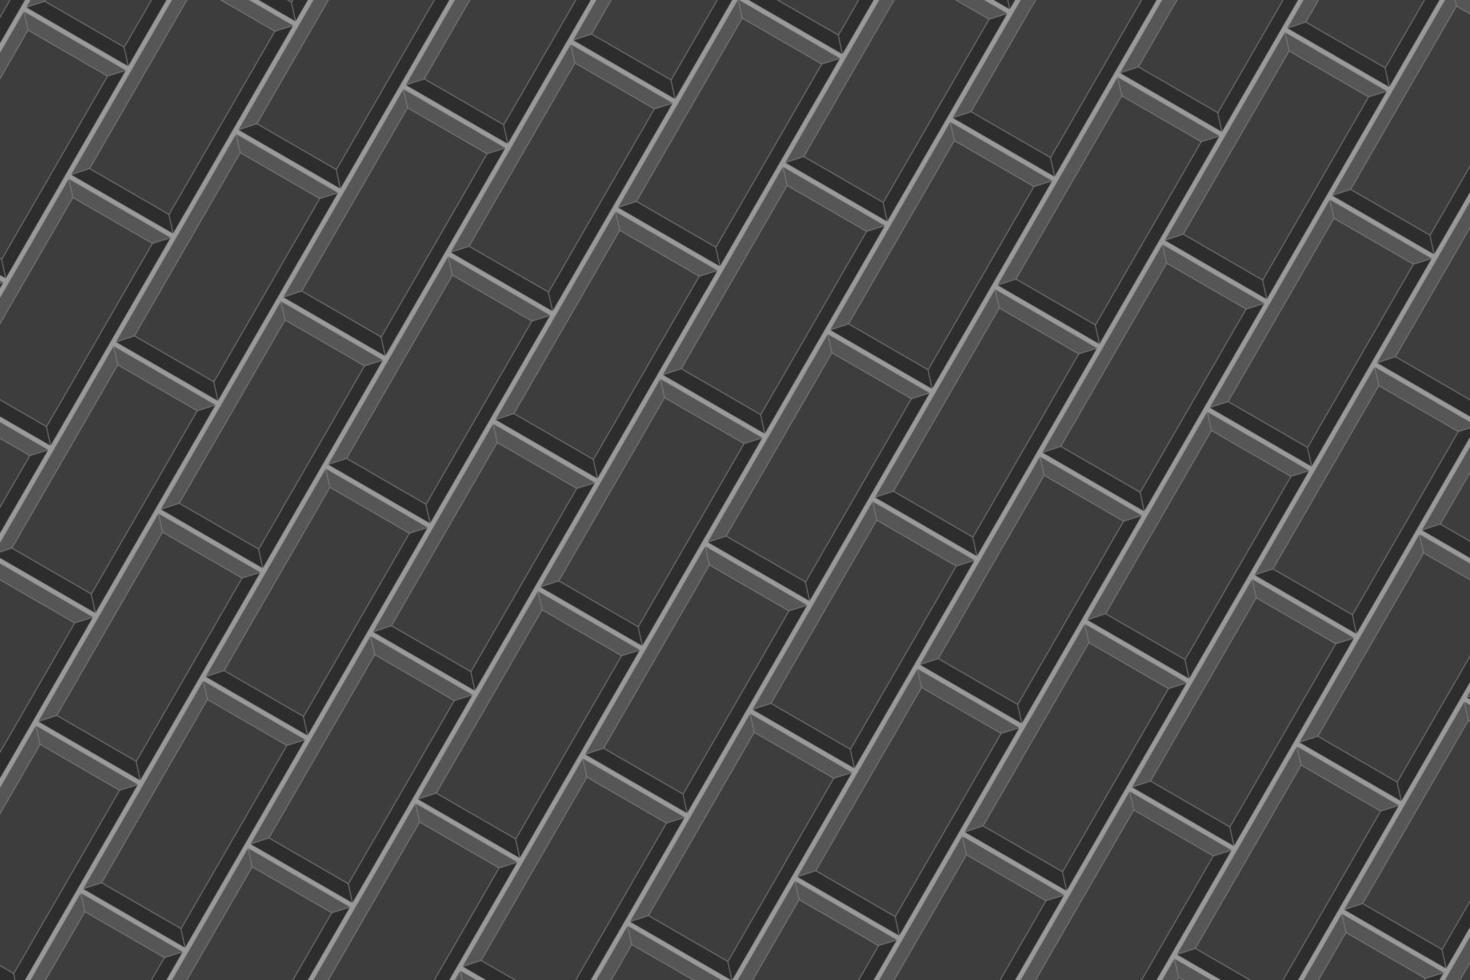 Black rectangles tile diagonal arrangement background. Ceramic or stone brick wall texture. Kitchen backsplash or bathroom floor seamless pattern vector